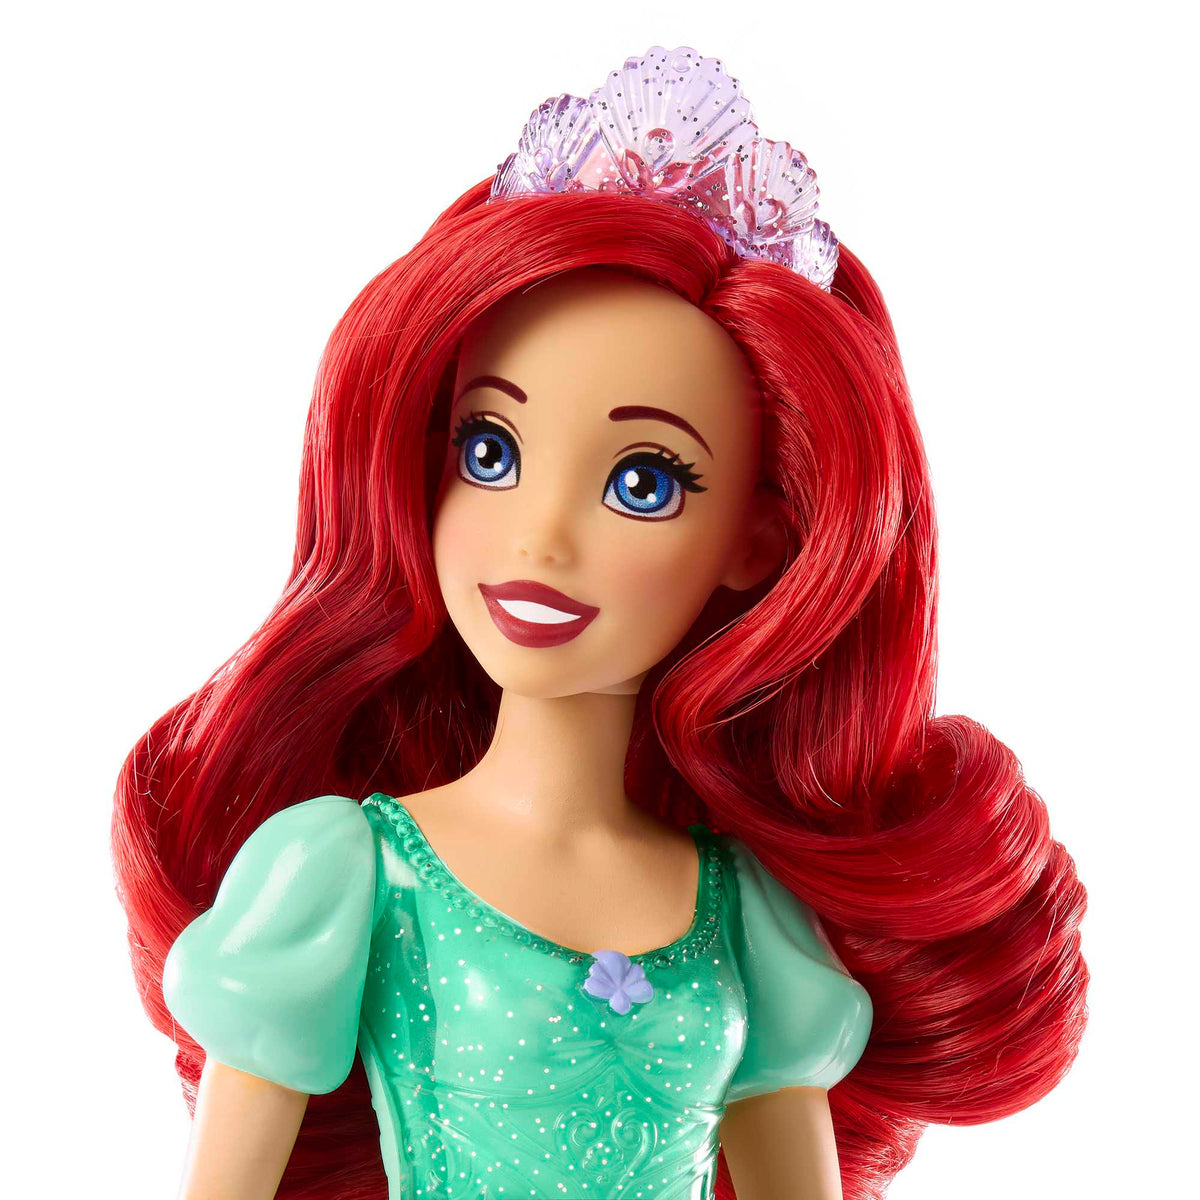 Disney Princess Doll Ariel Posable Fashion Doll